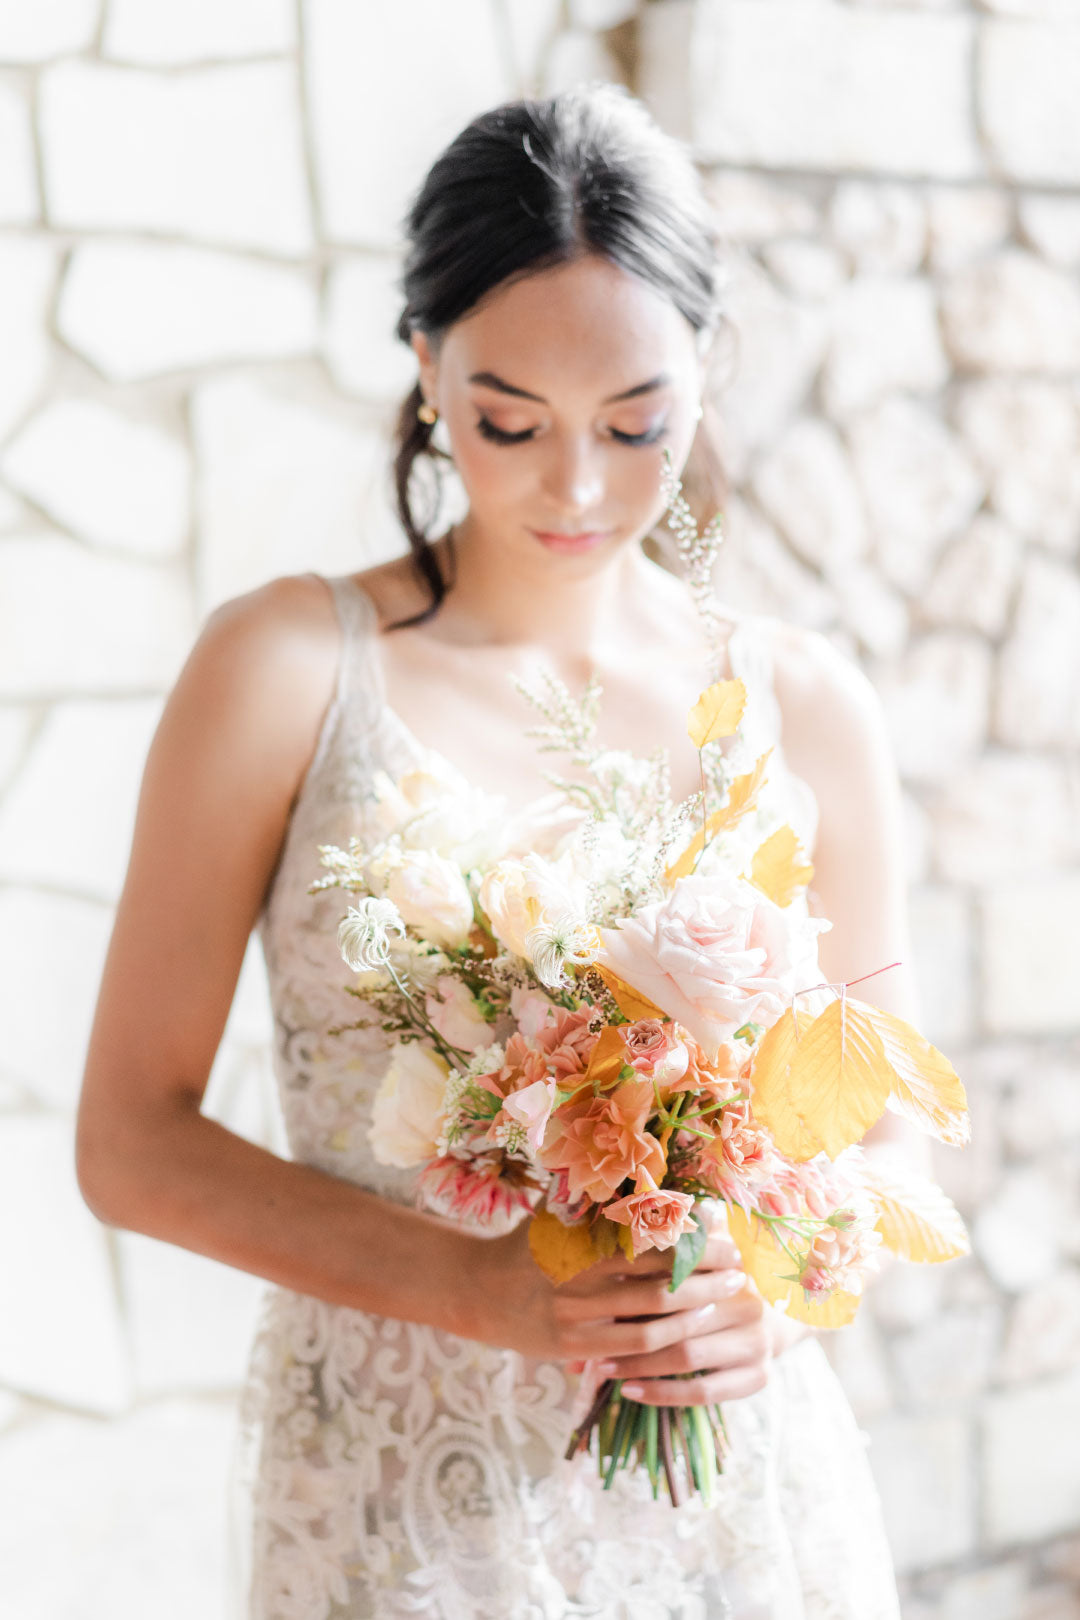 Bride holding wedding floral bouquet